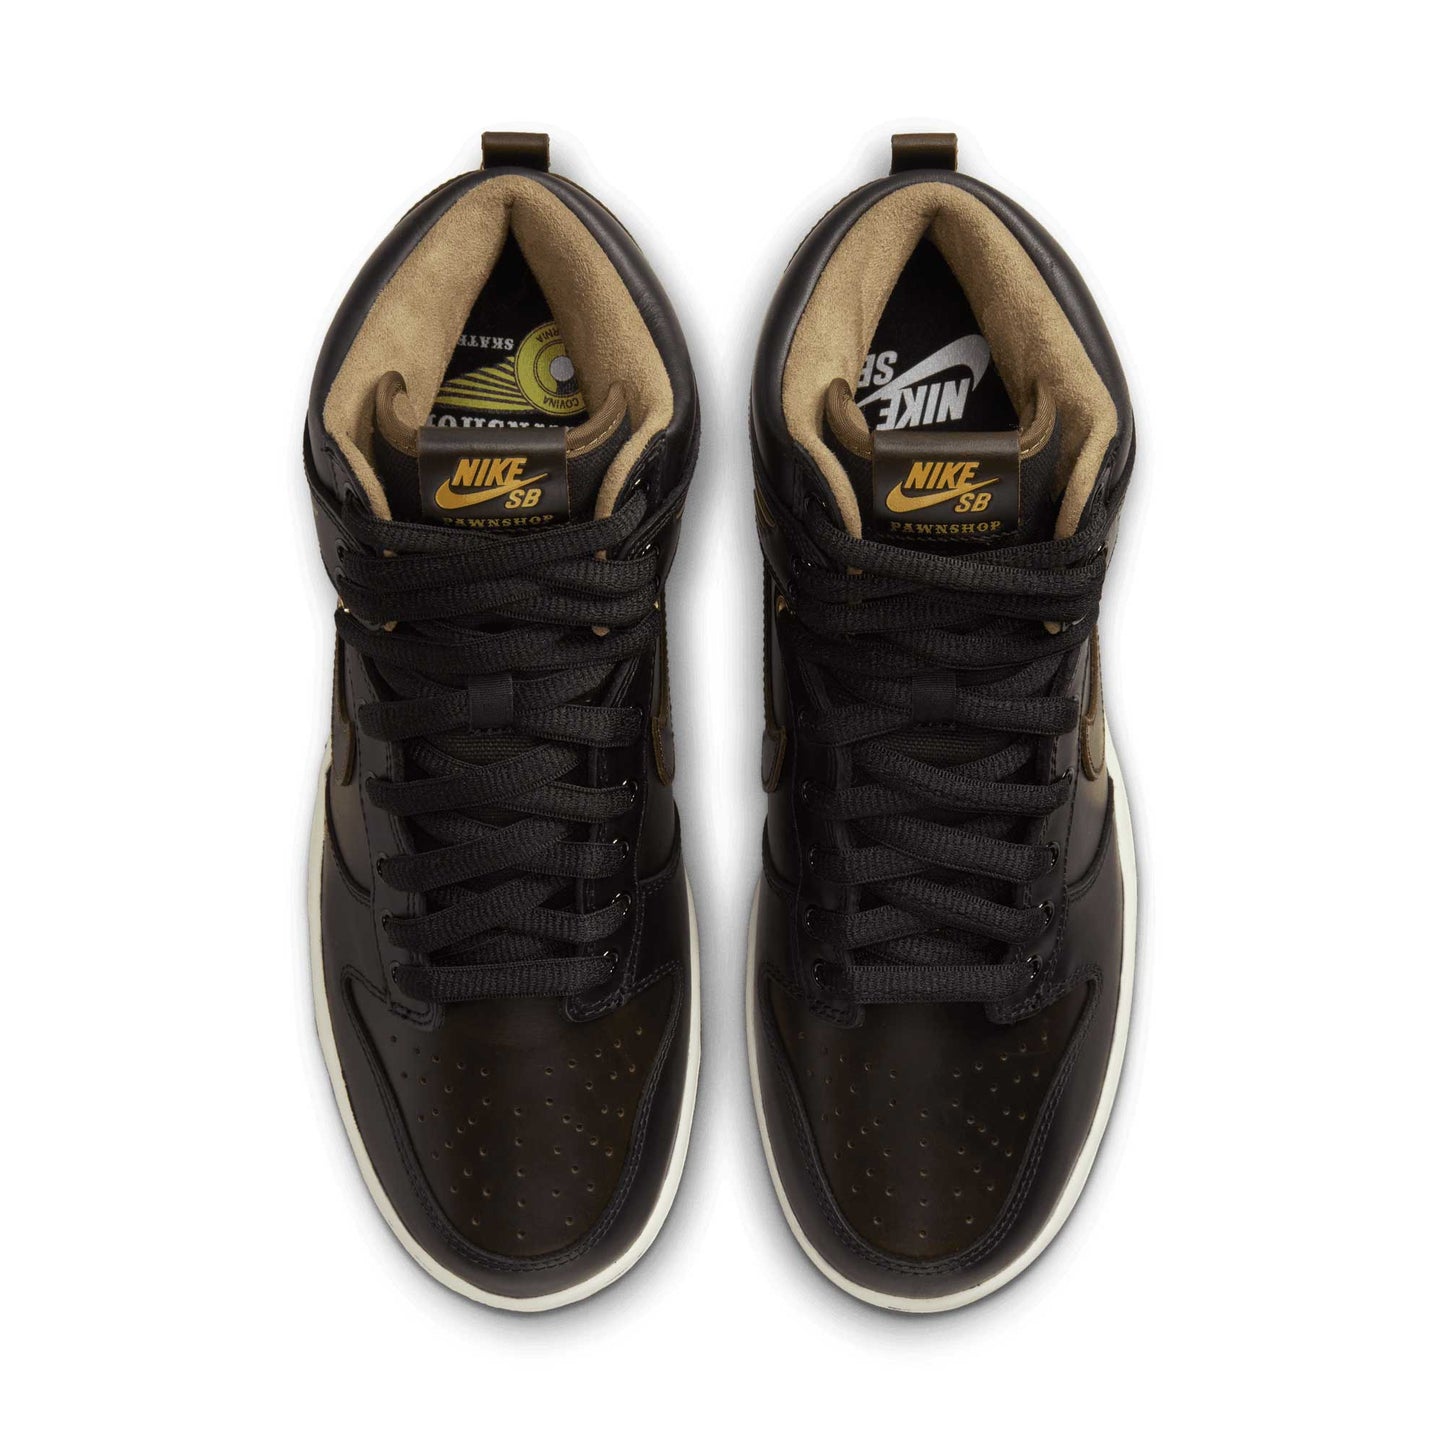 Nike SB Dunk High OG Pawnshop QS, black/black-metallic gold - Tiki Room Skateboards - 3